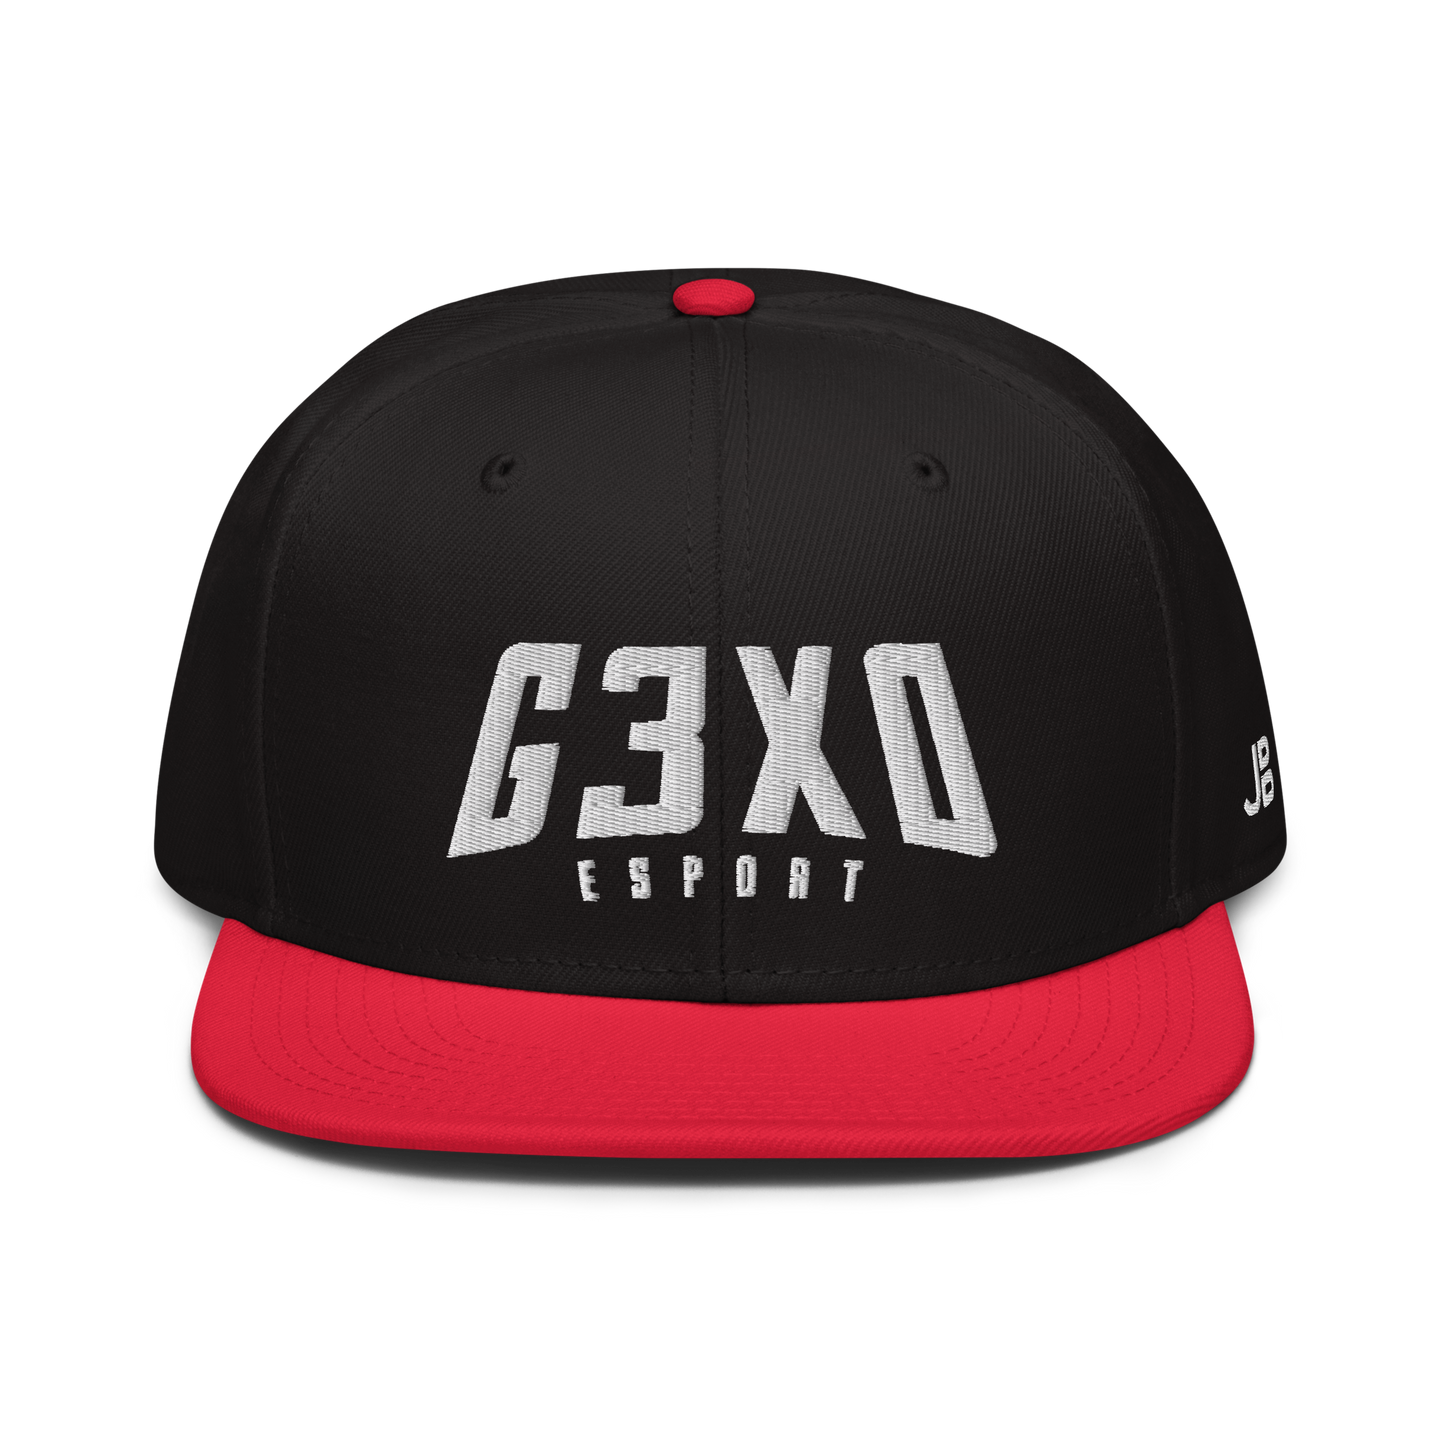 G3XO ESPORT - Snapback Cap